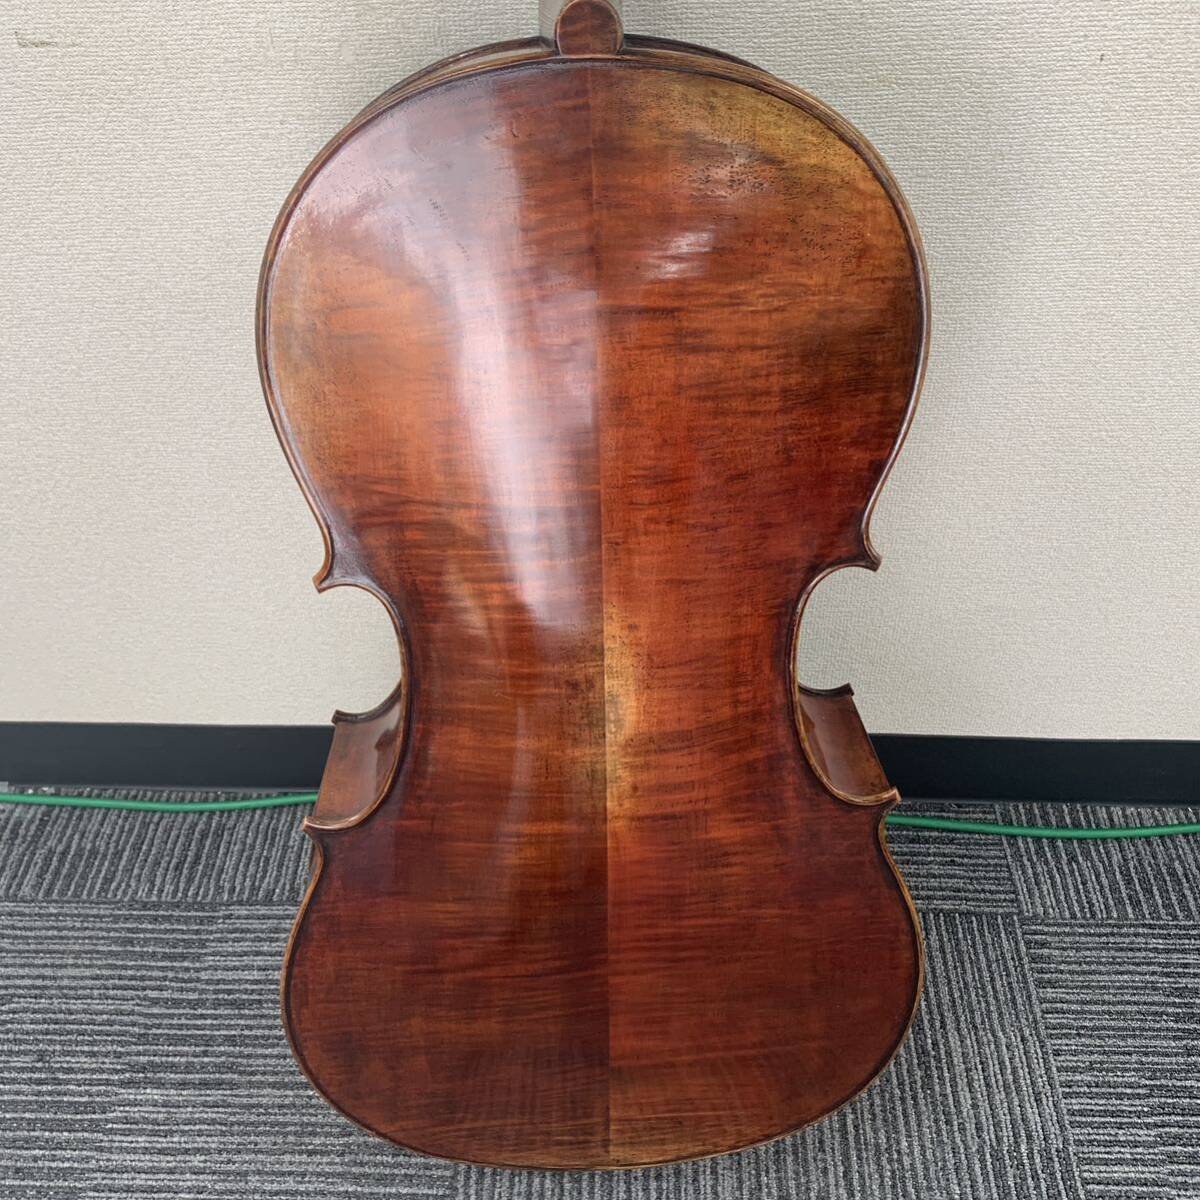 [ direct receipt limitation ] Samuel Kolstein & Son Violin Makers Master art model #160 Cello contrabass Anno 2014 stringed instruments case attaching Dr 1694-42